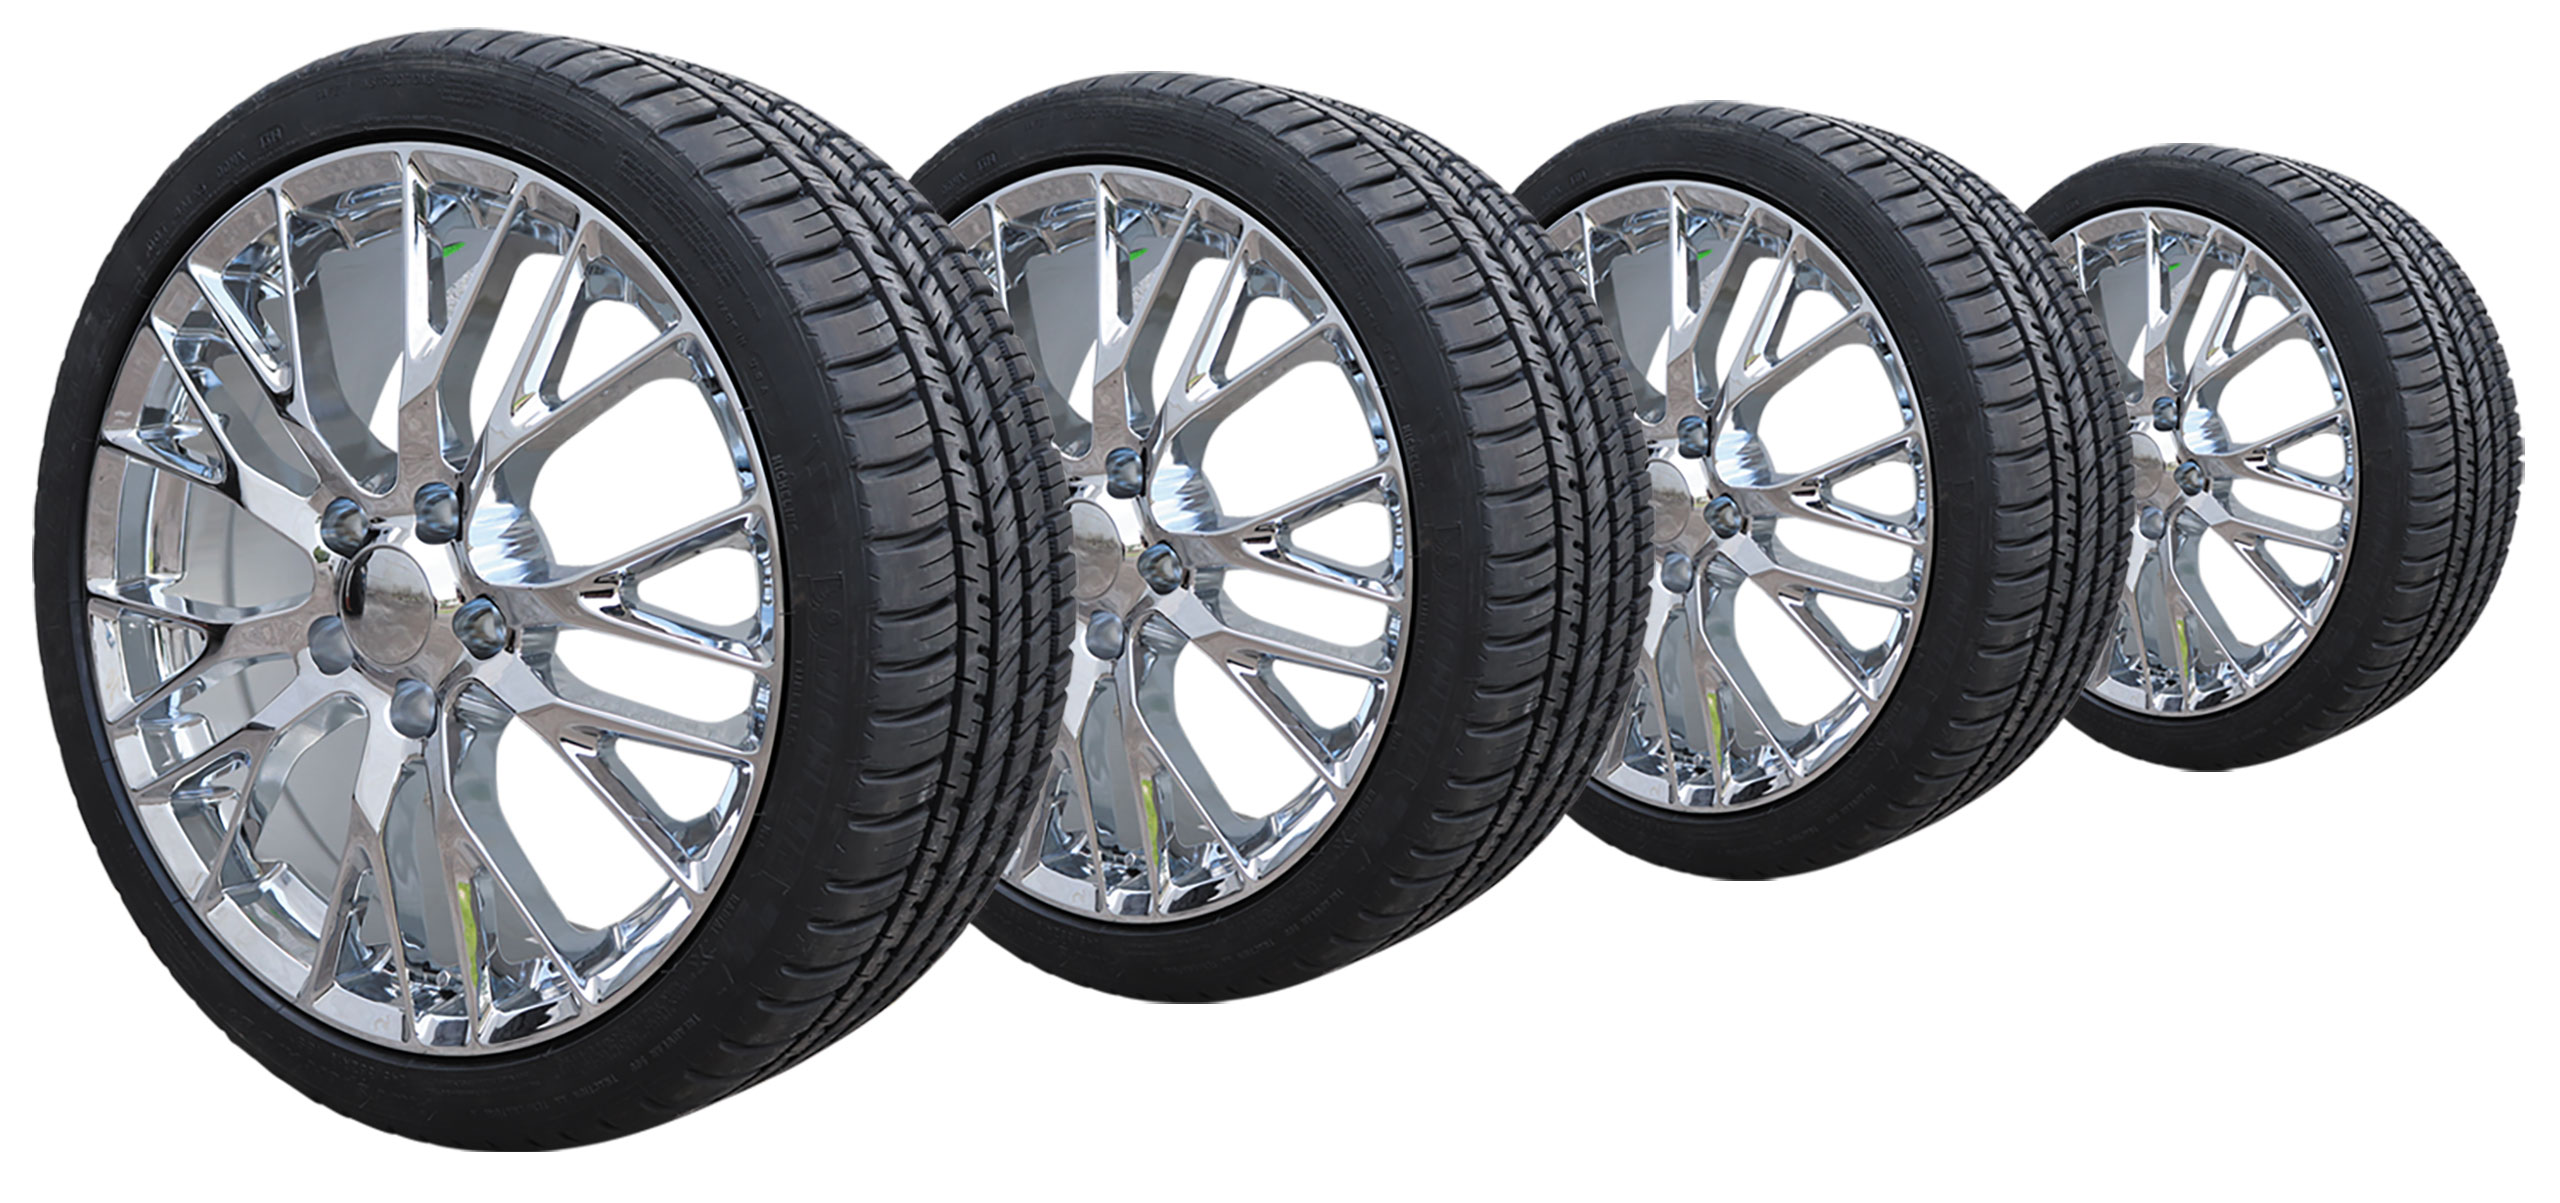 57122 Tire/Wheel Pkg C6 Z06 Split 5 Spoke Gloss Black W/Wide Fronts On Michelin Tires For 05-13 Corvette